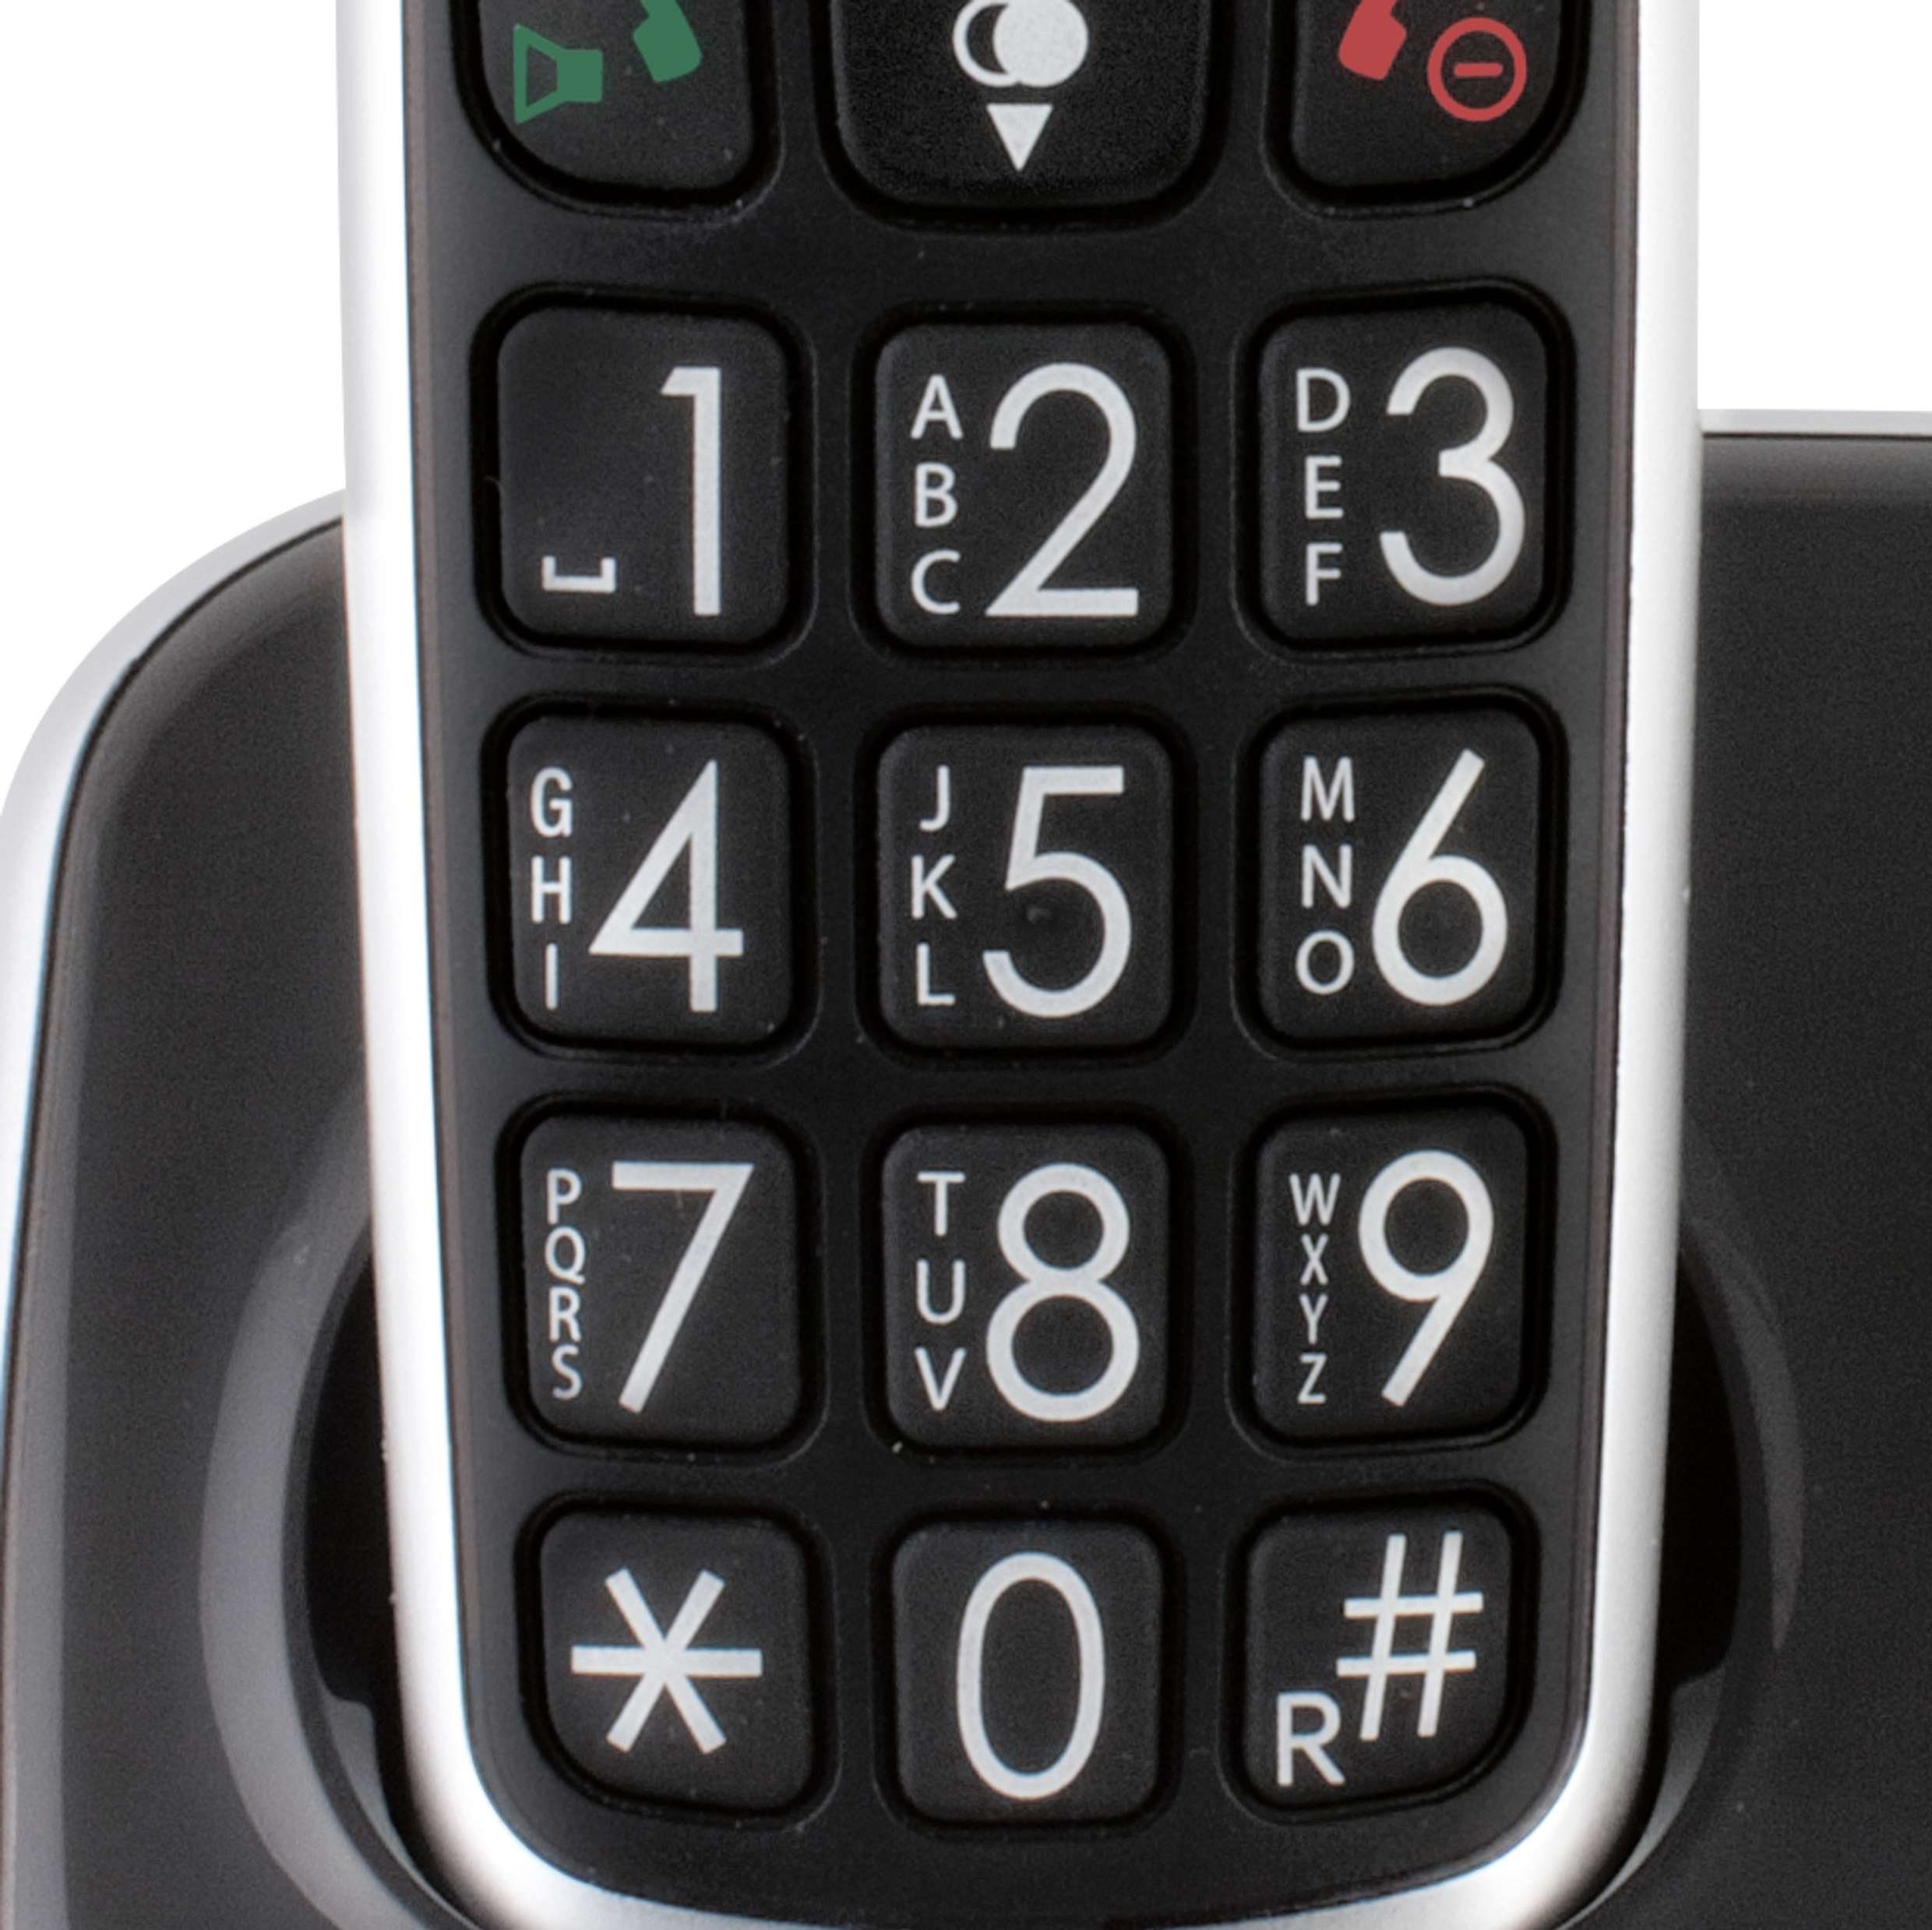 Fysic FX-6020 DECT-Telefon Schnurloses großes große (Mobilteile: Tasten, Hörgerätkompatibel, 2, Display)